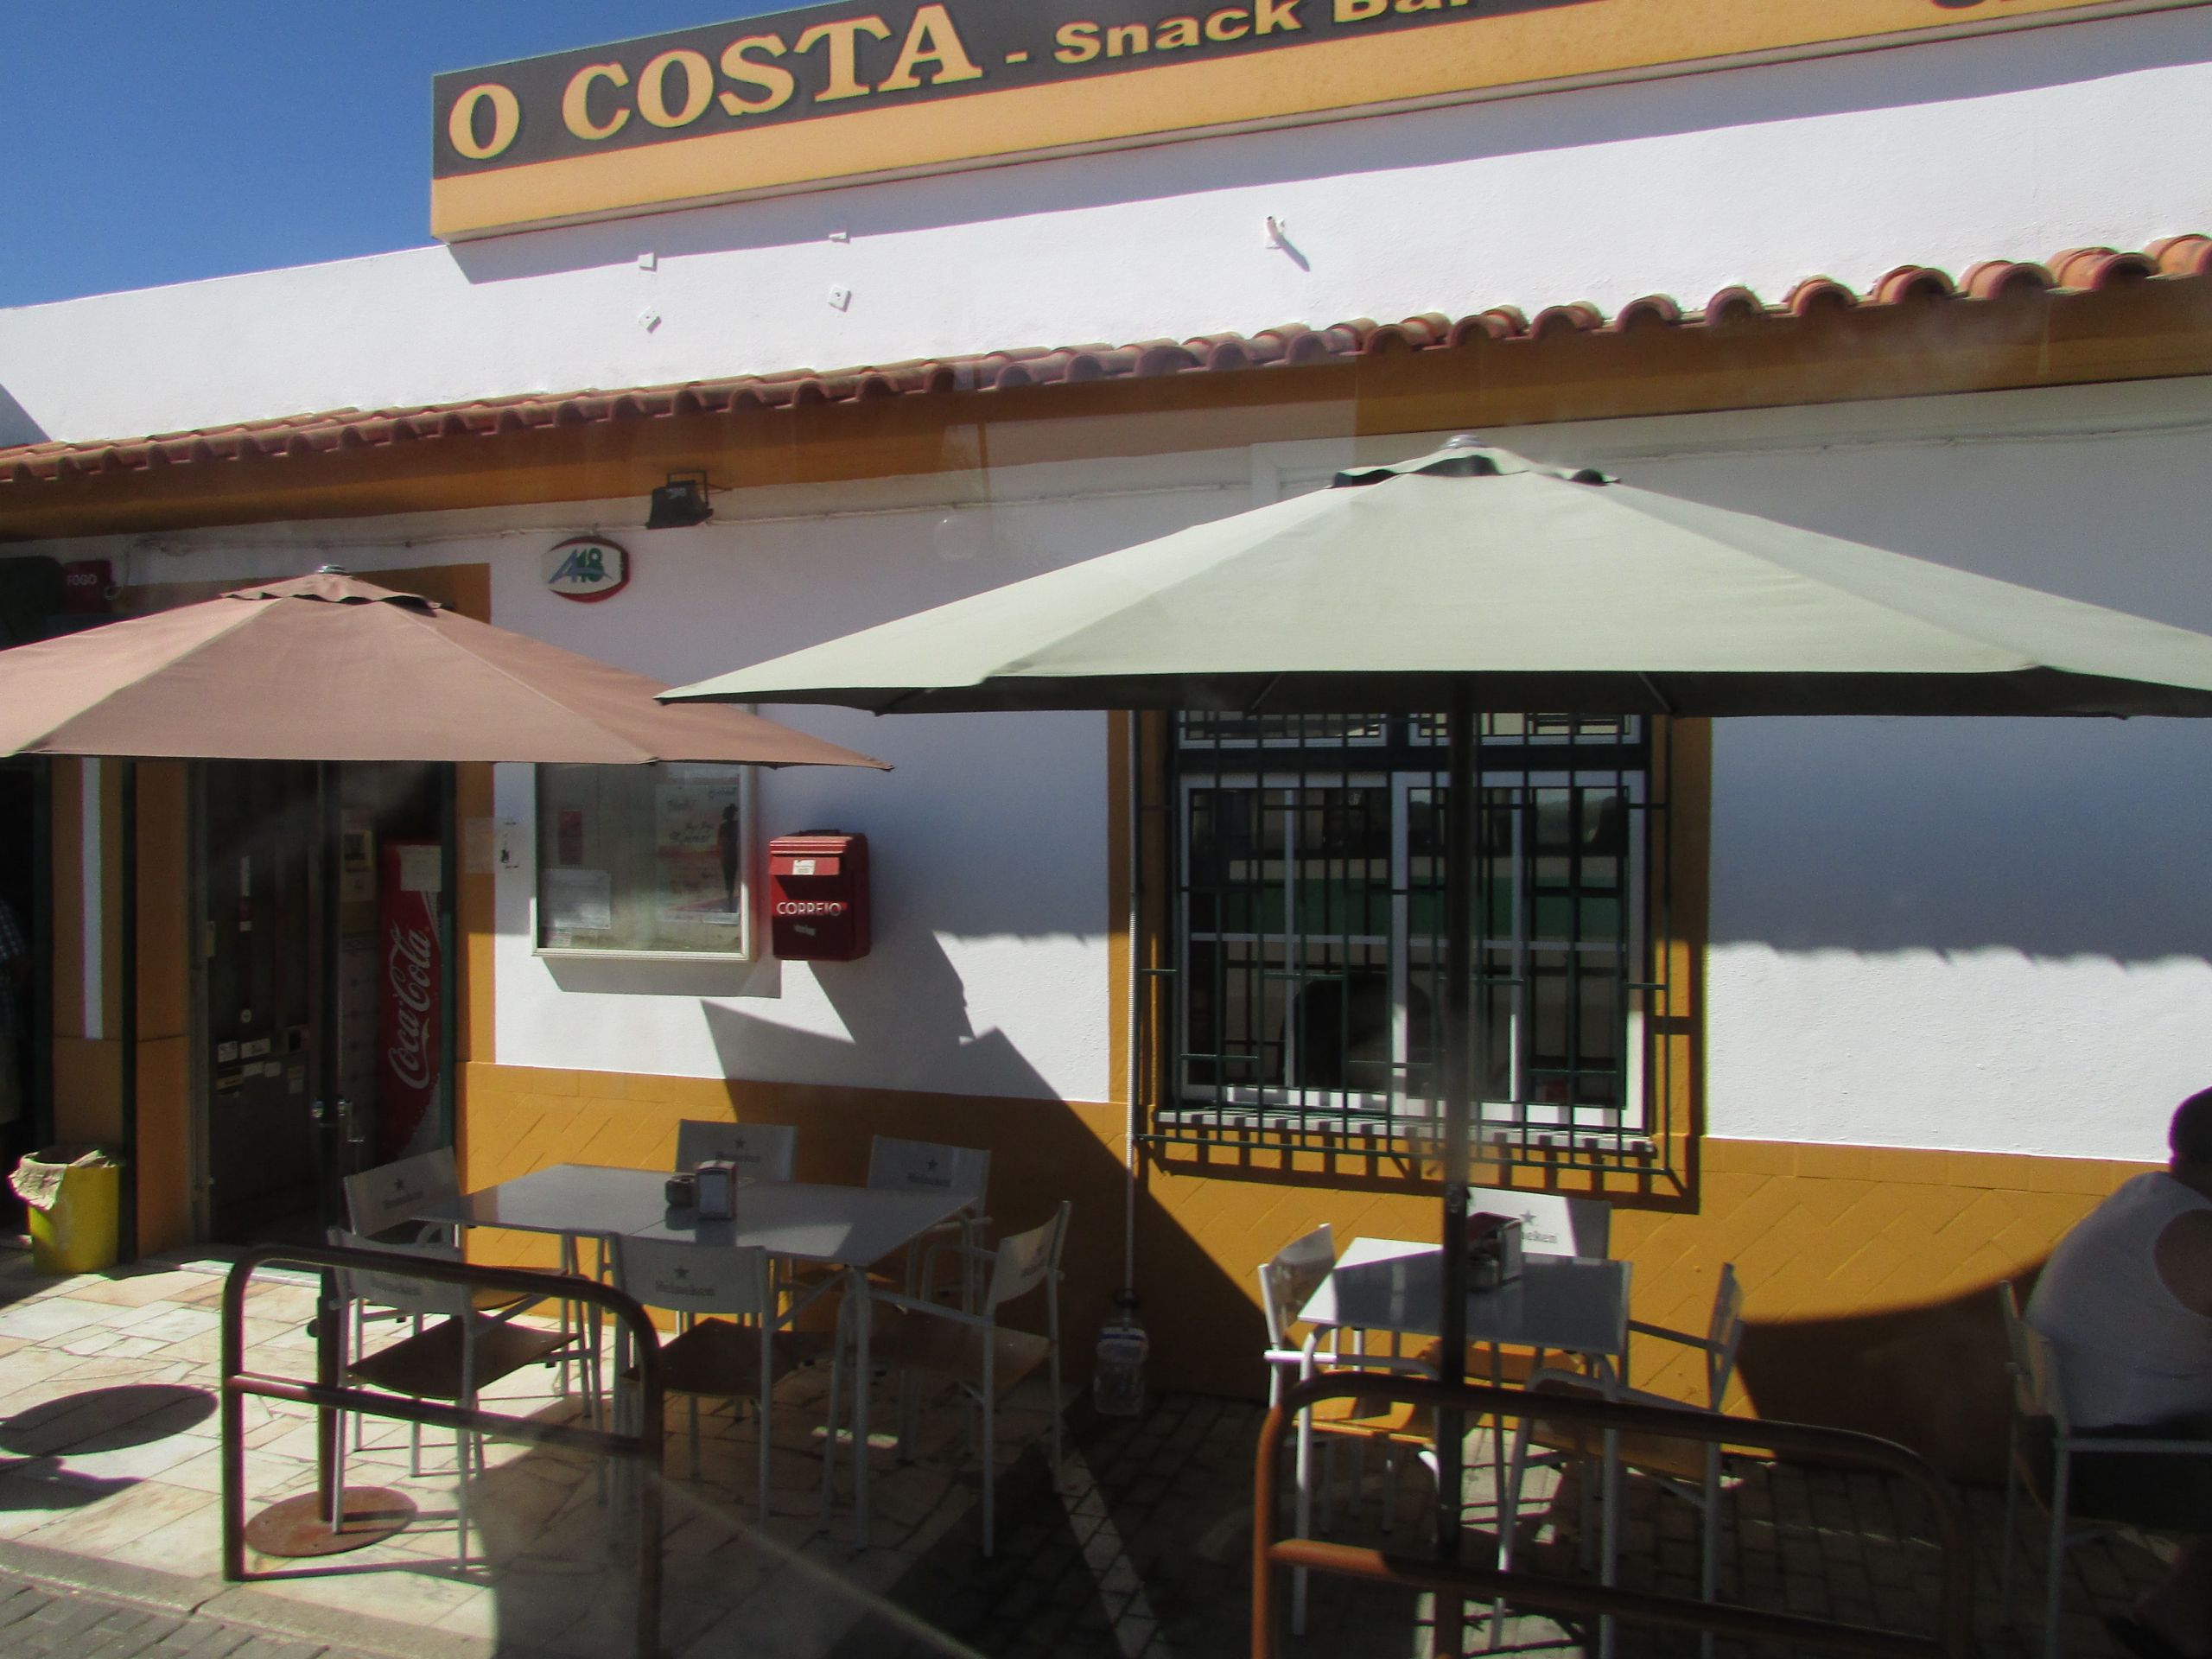 06 09 2017 O Costa snack bar Albufeira JPG